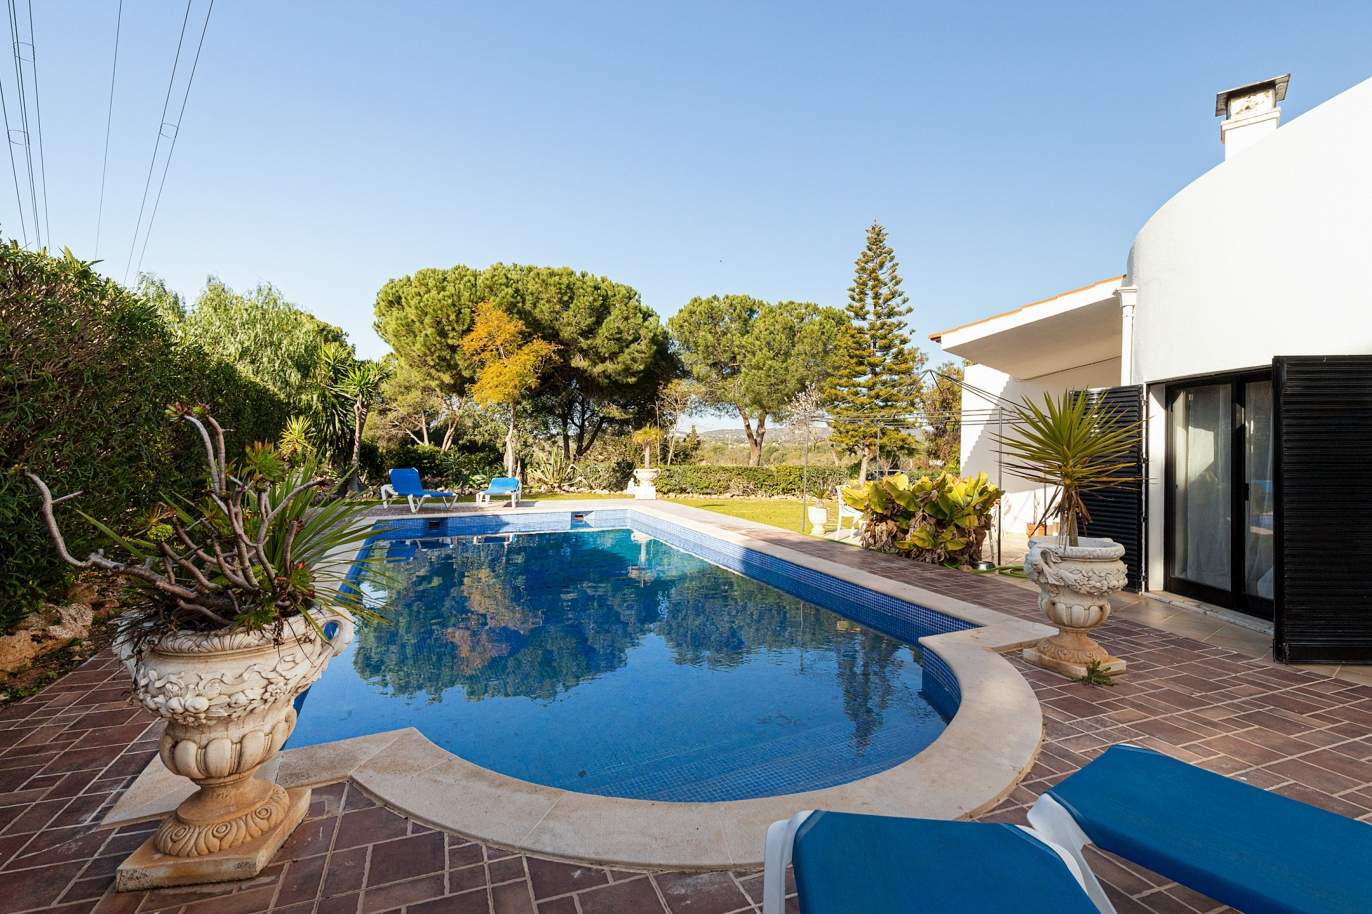 4 Bedroom Villa with swimming pool, for sale in Boliqueime - Algarve_192005